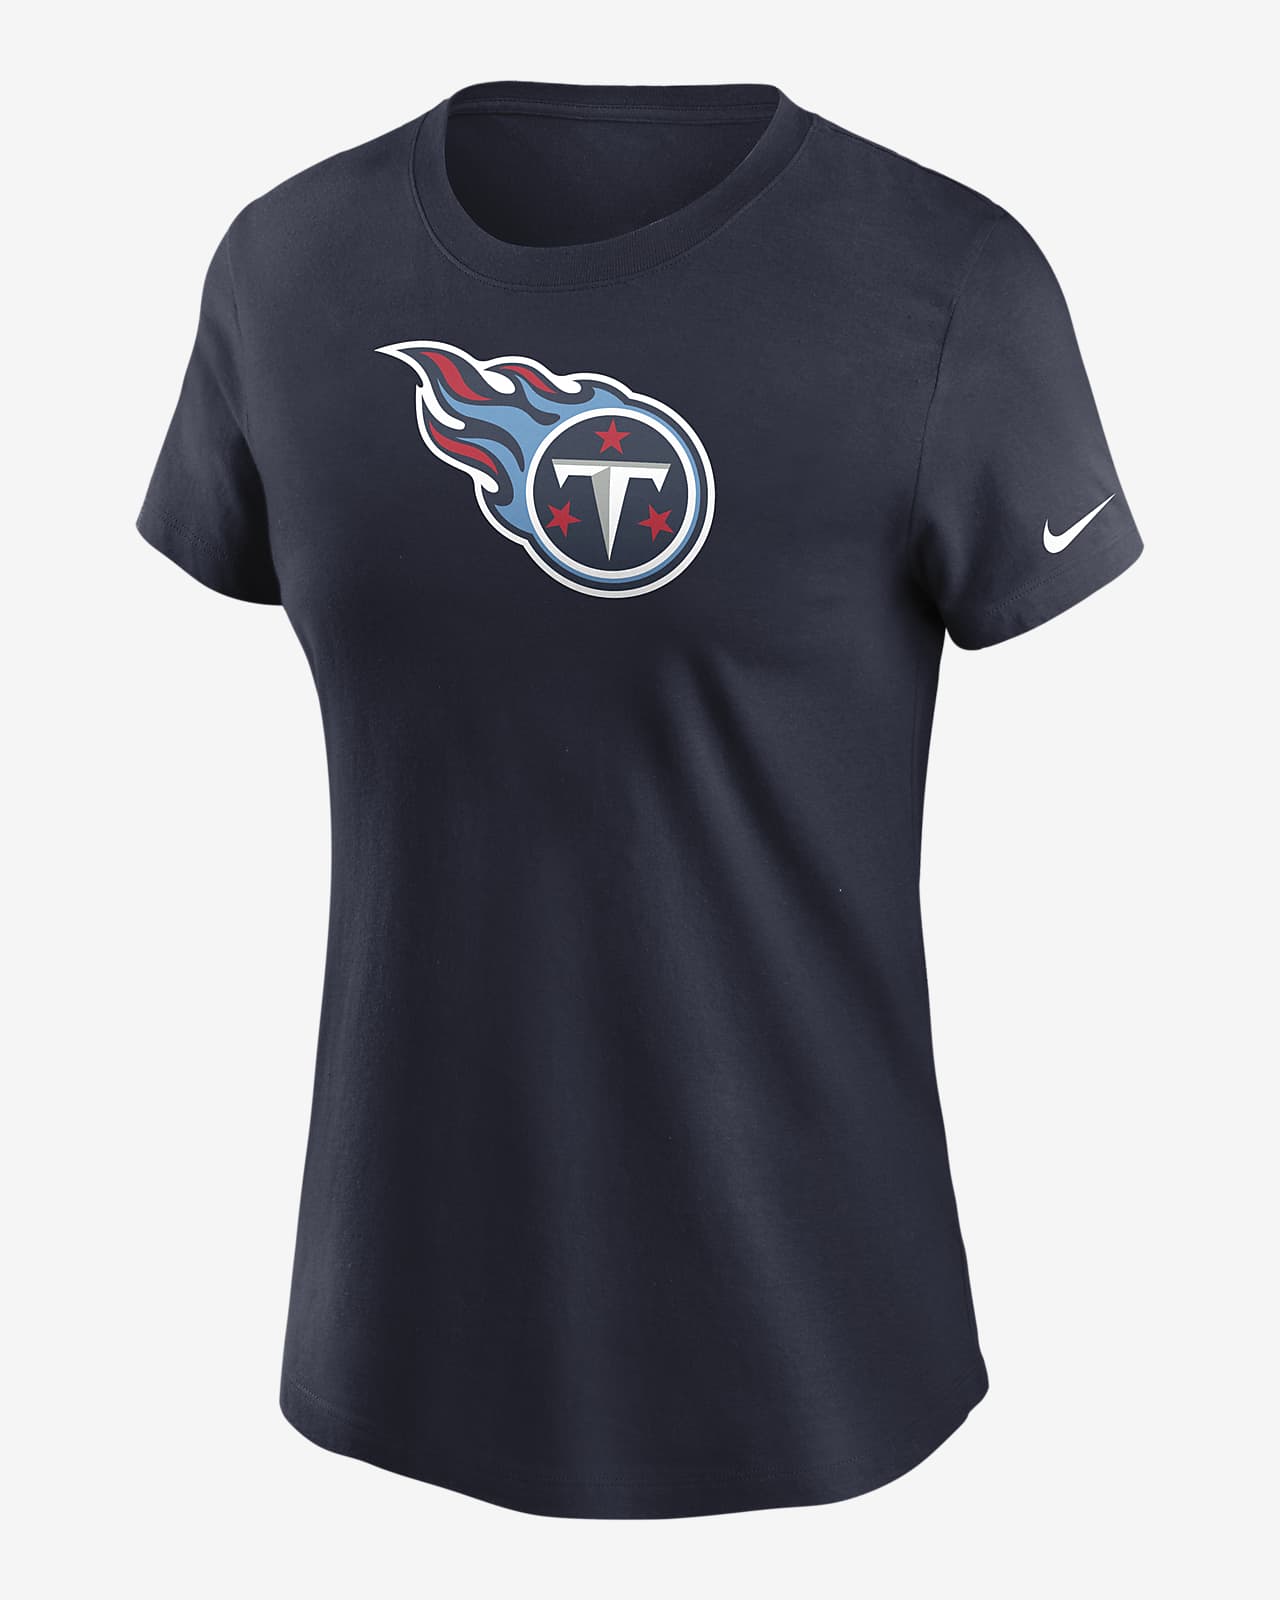 Nike Logo (NFL Tennessee Titans) Women's T-Shirt